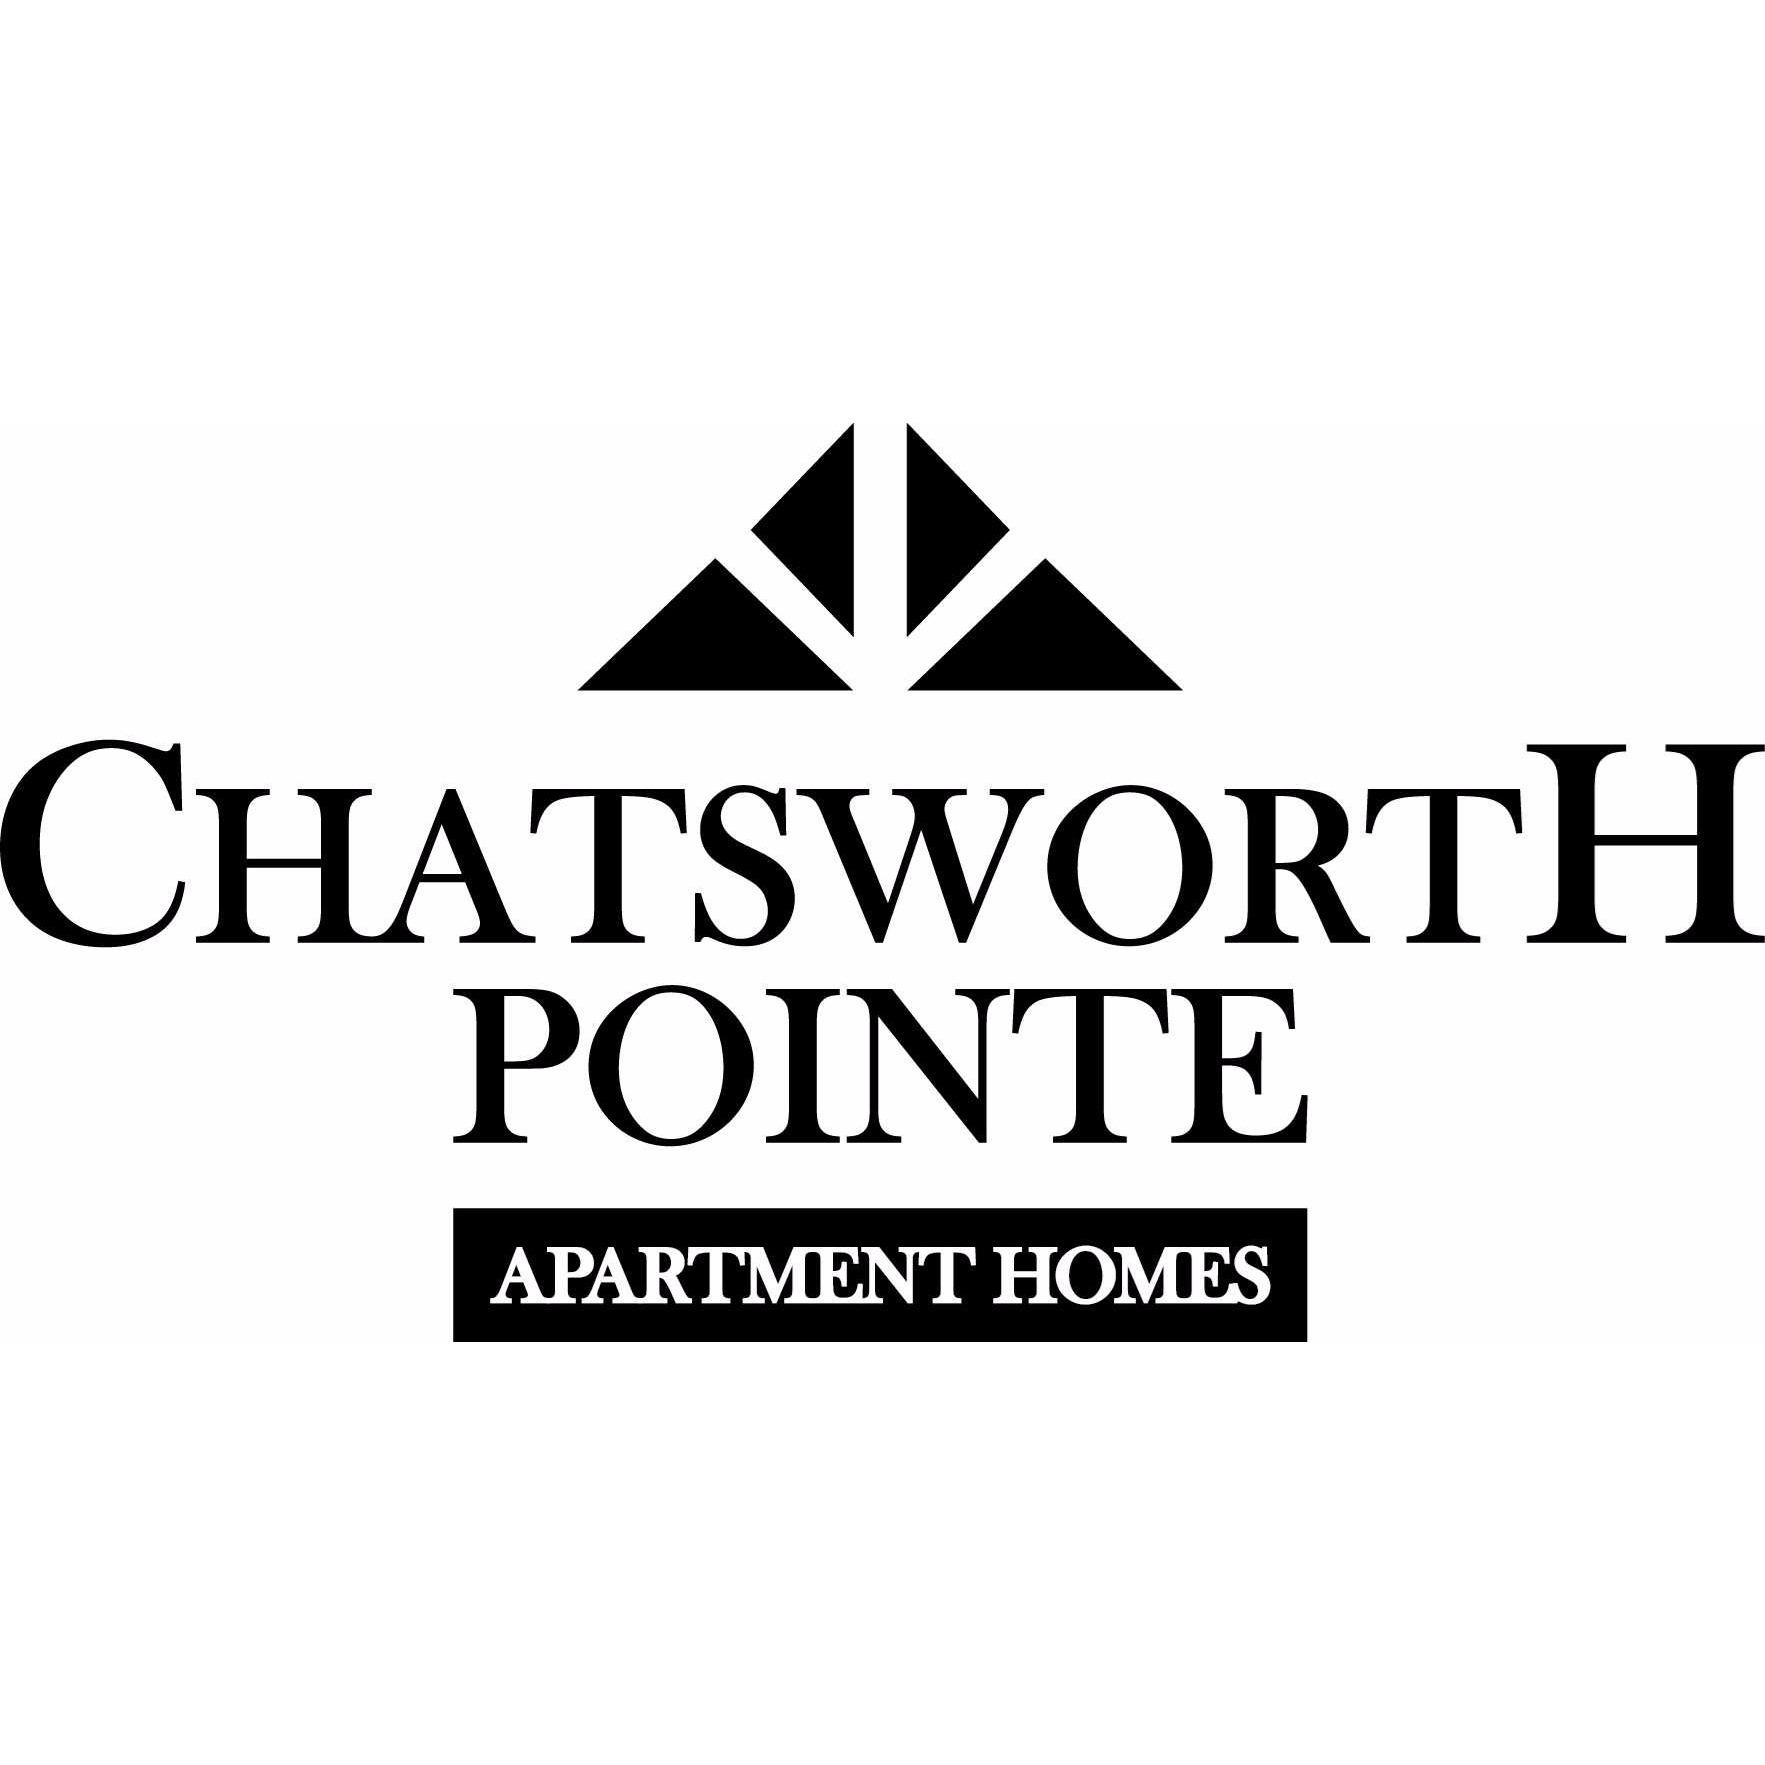 Chatsworth Pointe Canoga Park (747)234-2151